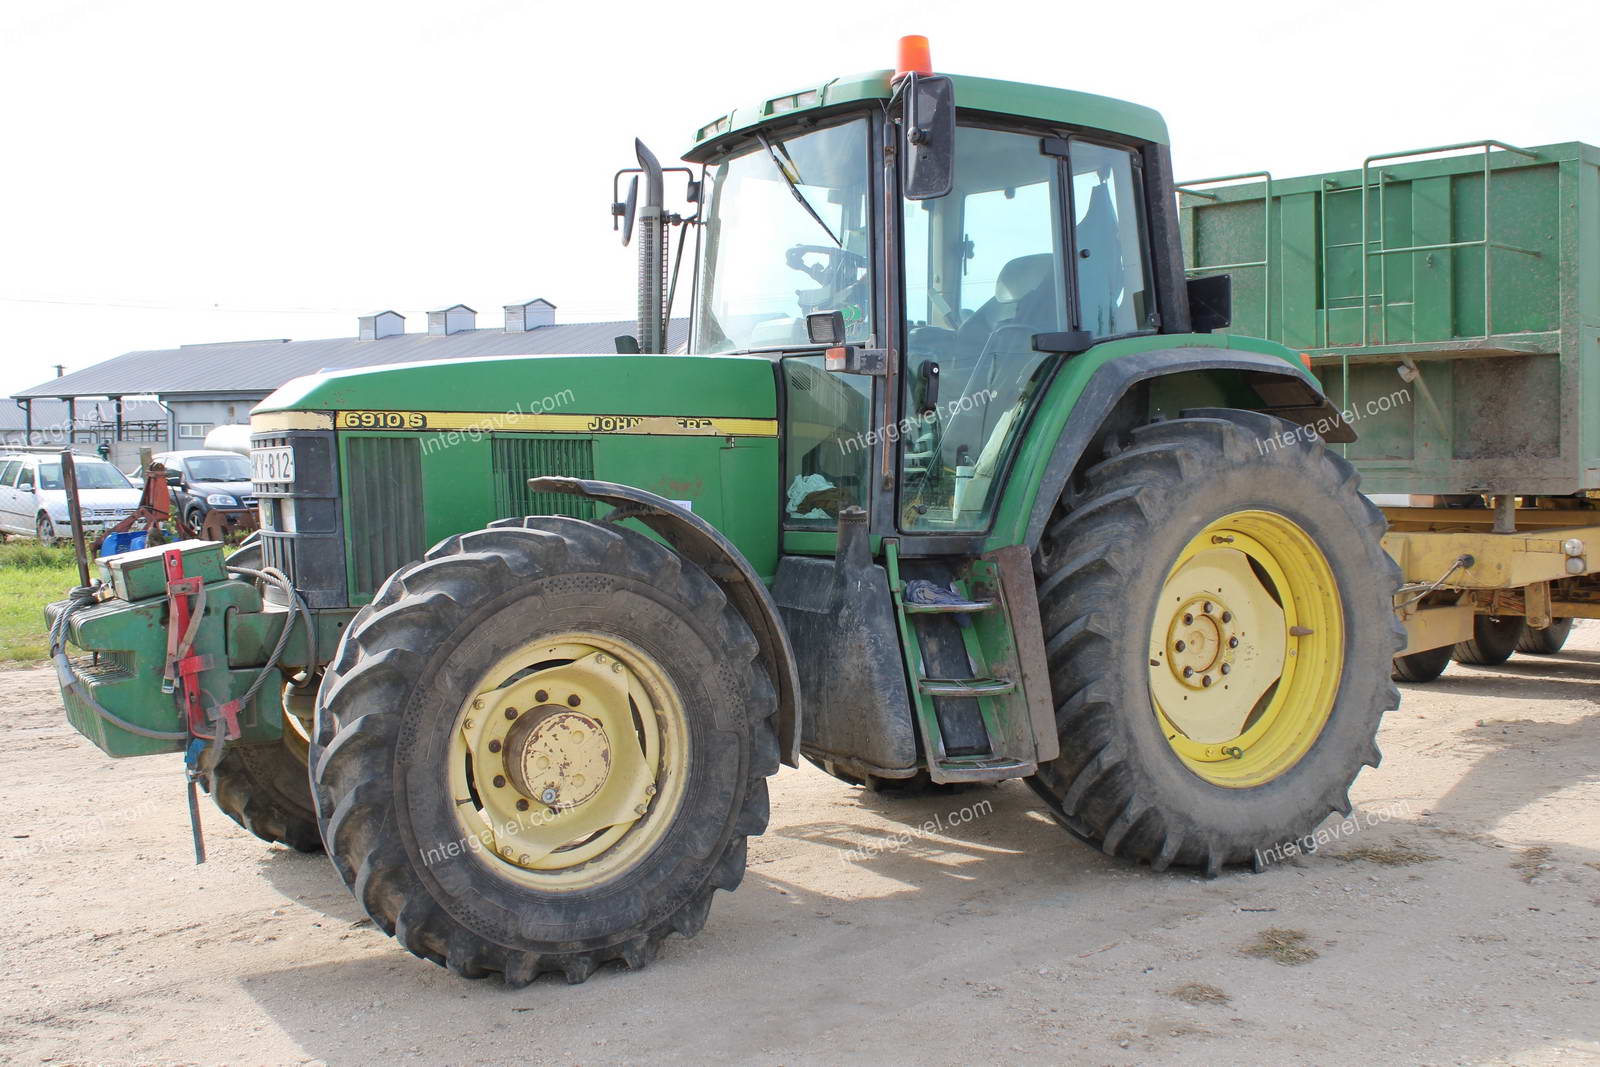 Traktor - John Deere, 6910